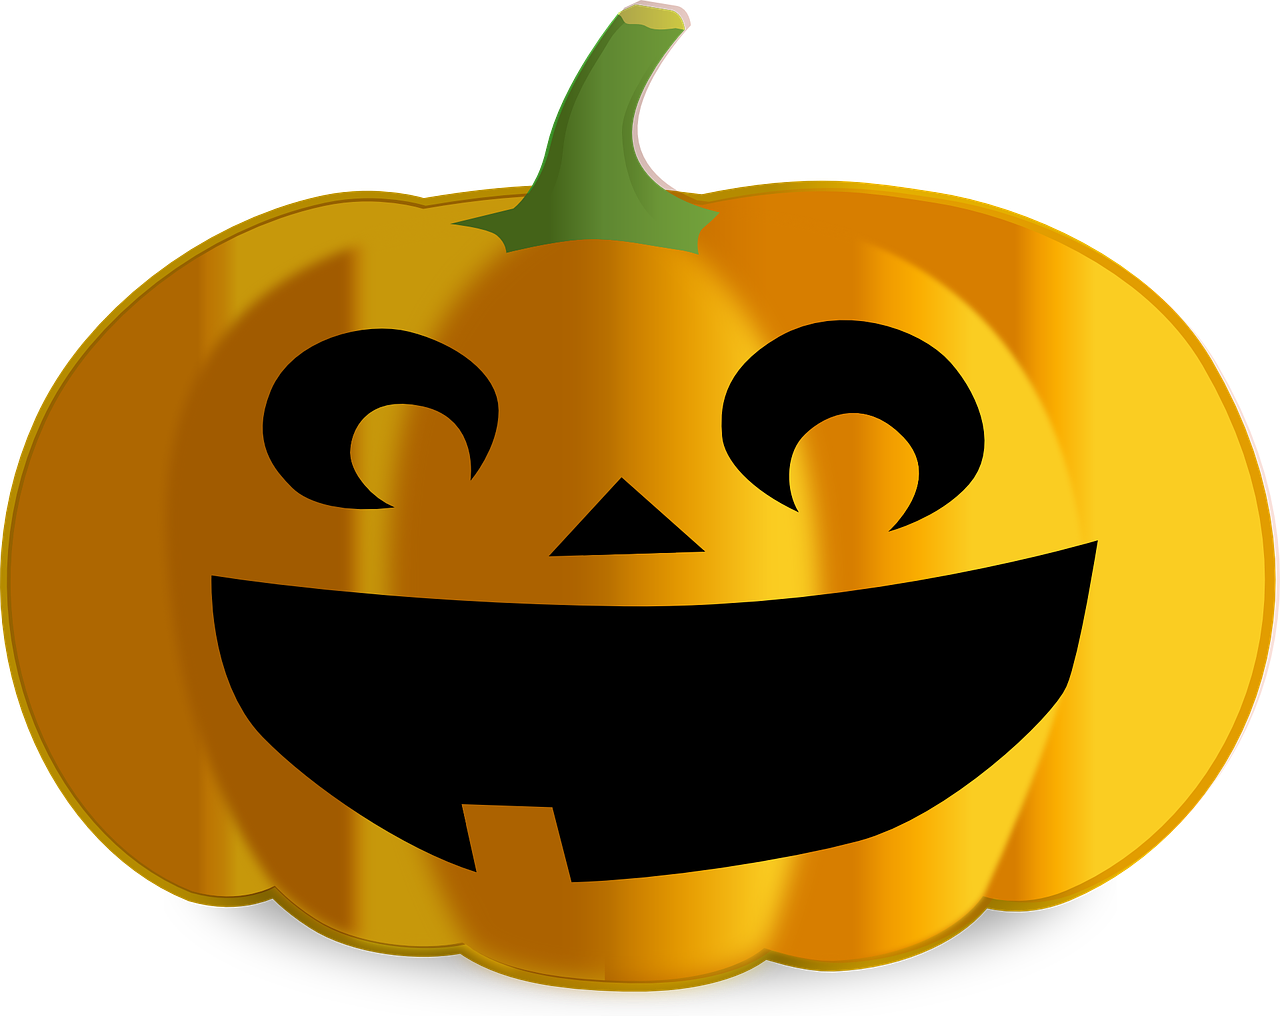 jack-o-lantern halloween pumpkin free photo